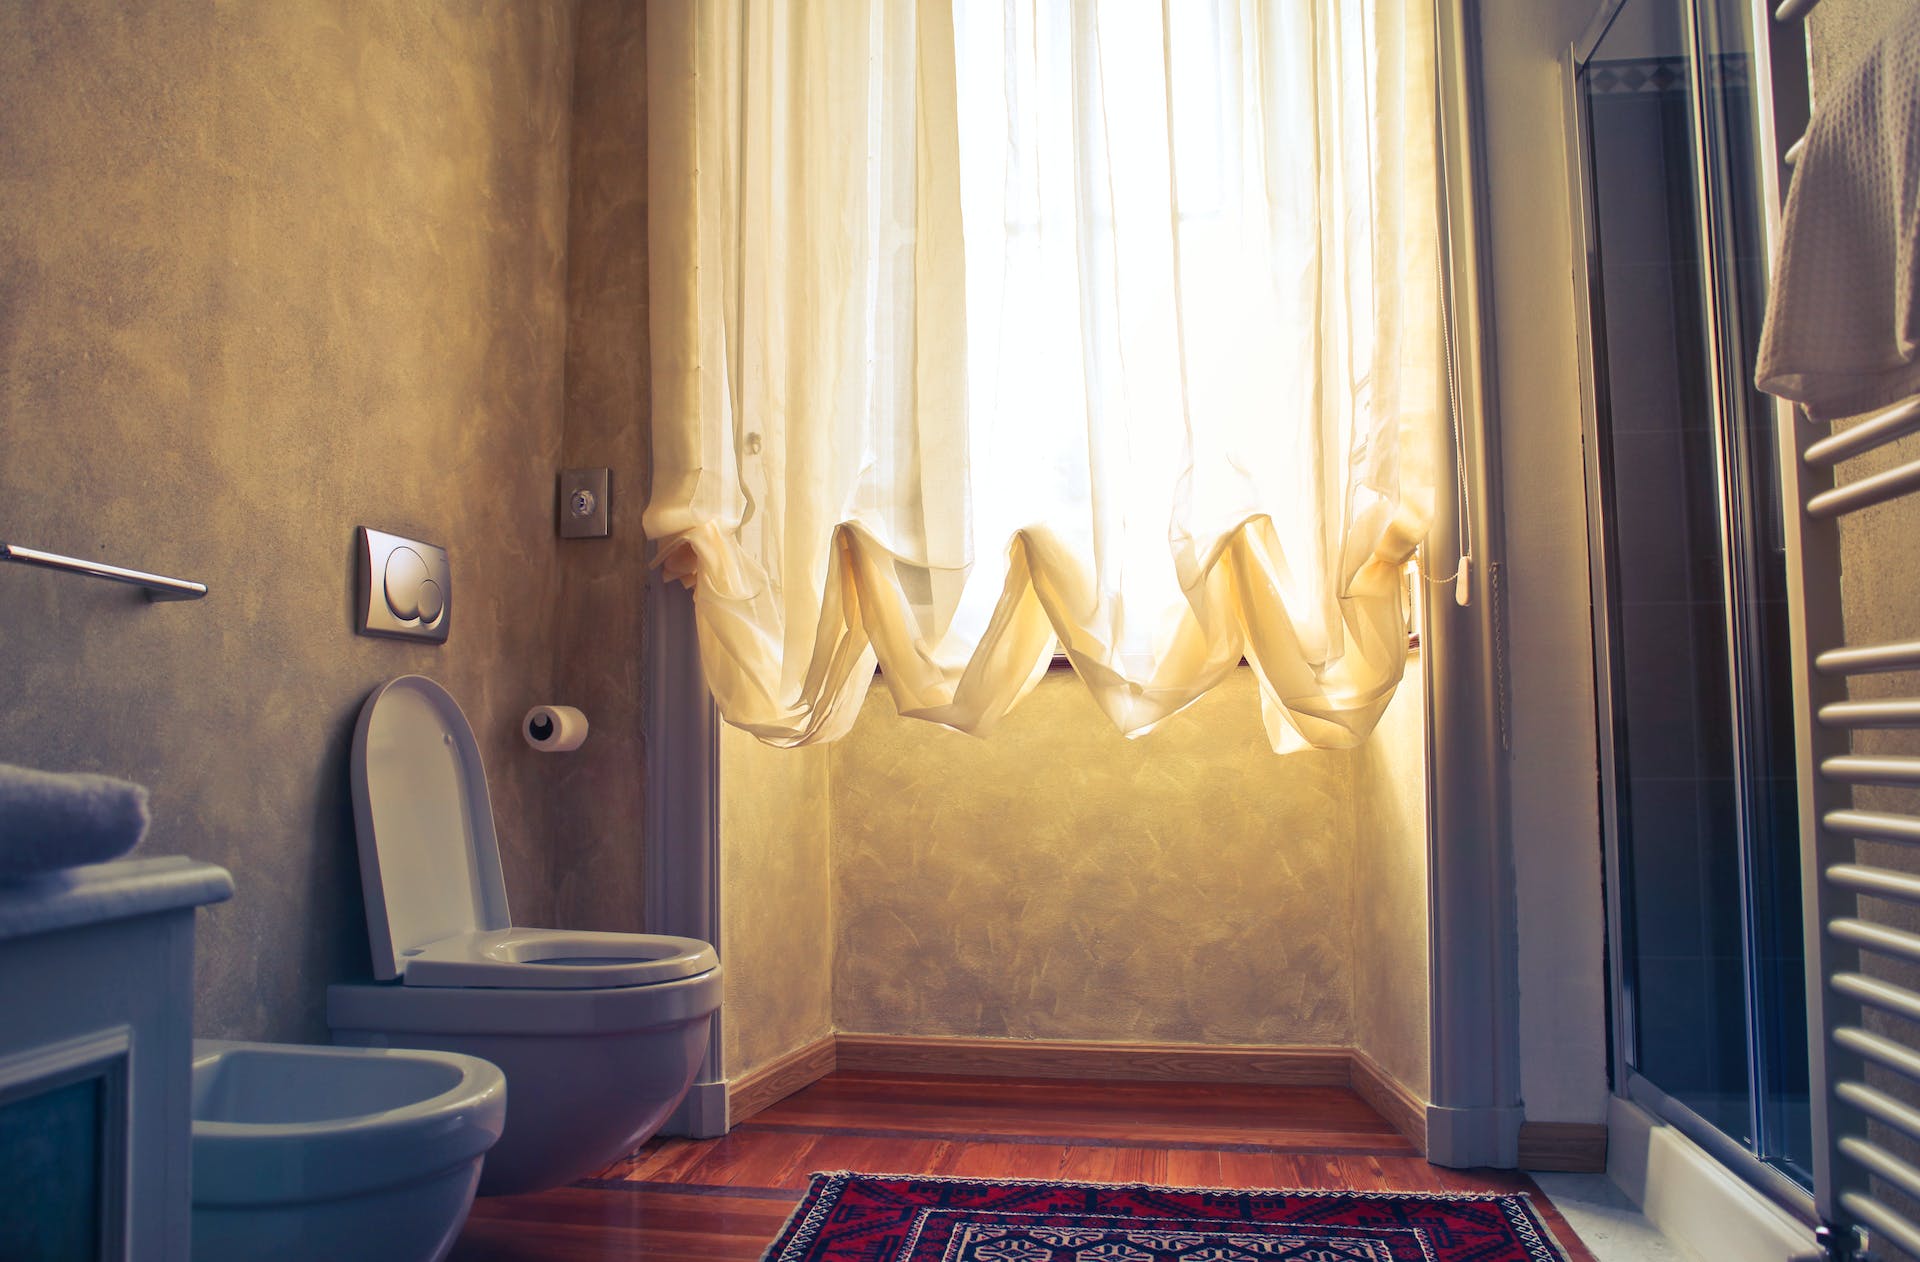 A well-lit bathroom | Source: Pexels